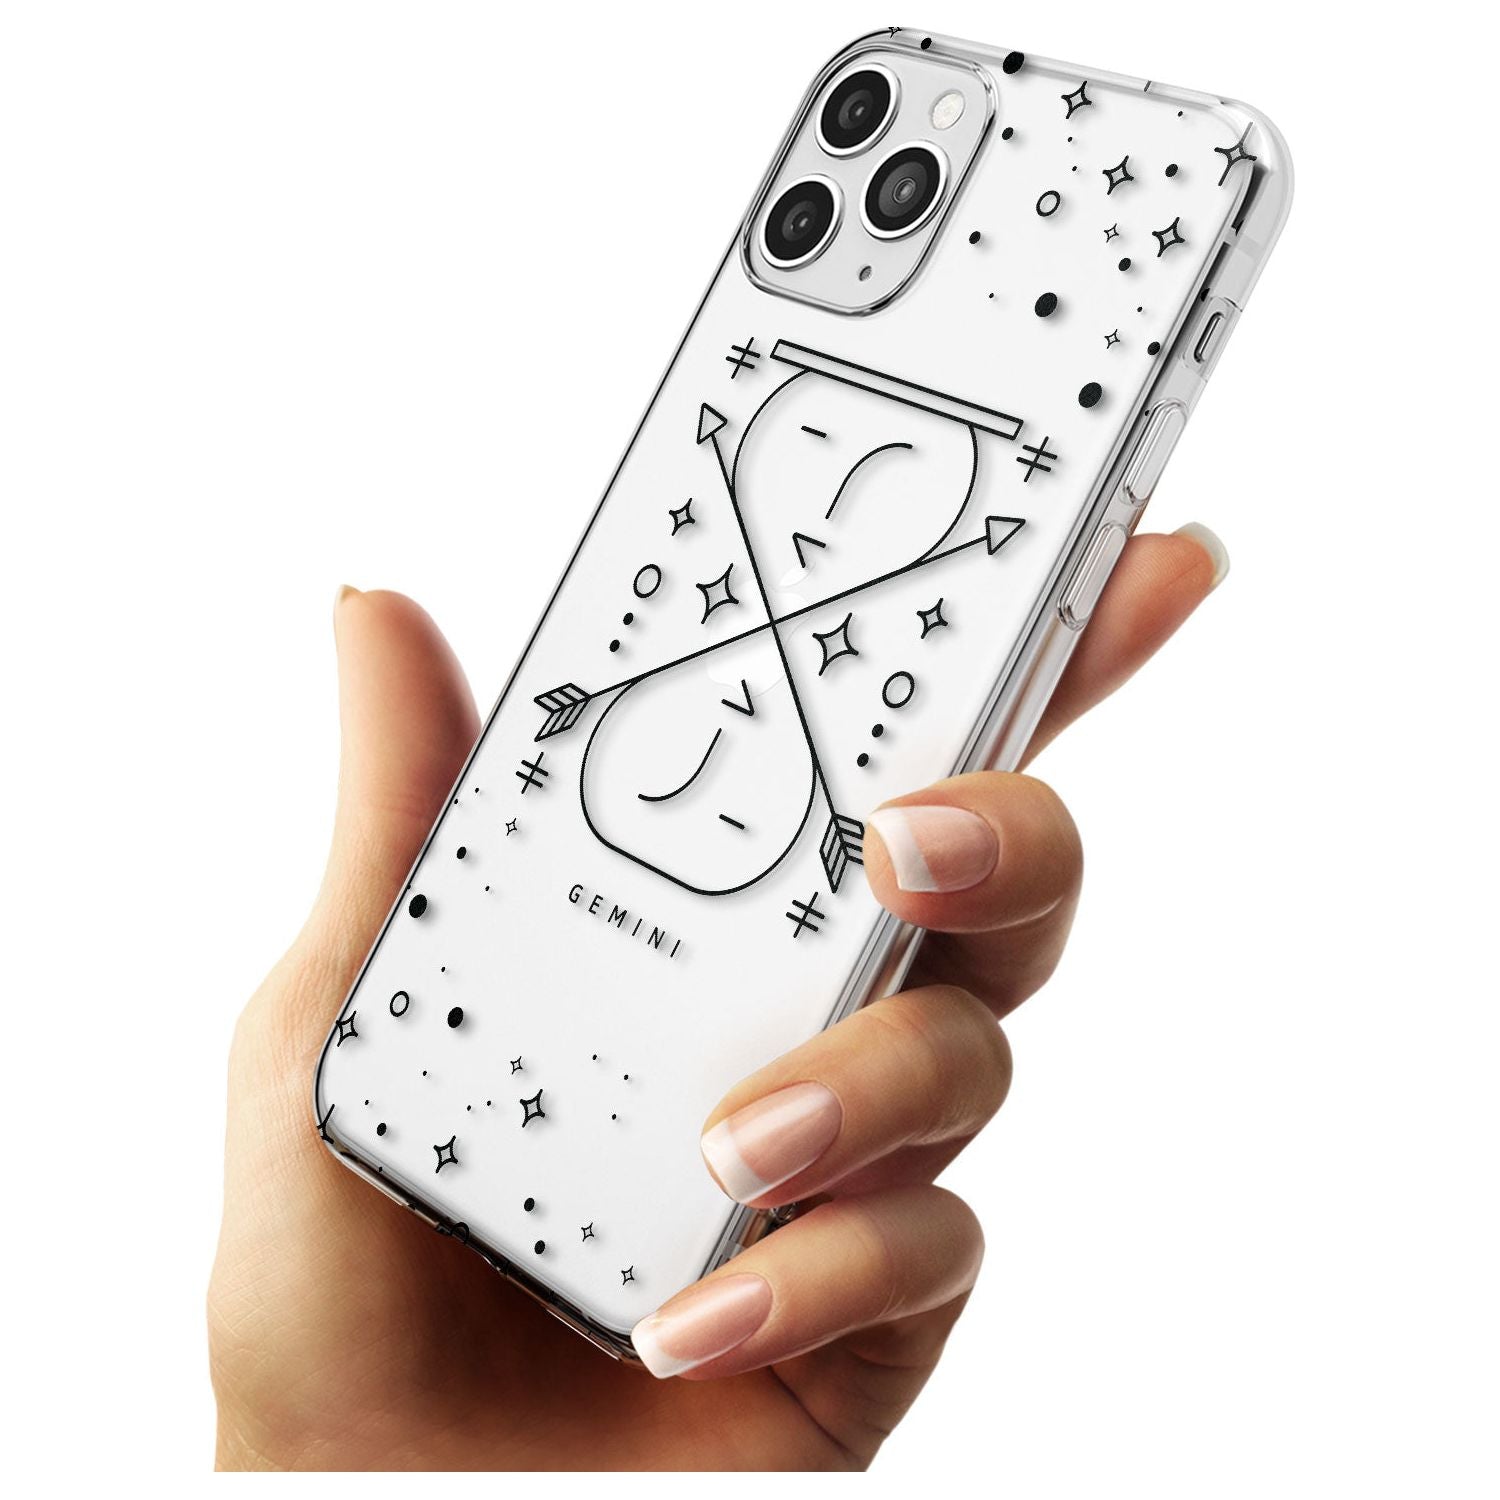 Gemini Emblem - Transparent Design Slim TPU Phone Case for iPhone 11 Pro Max